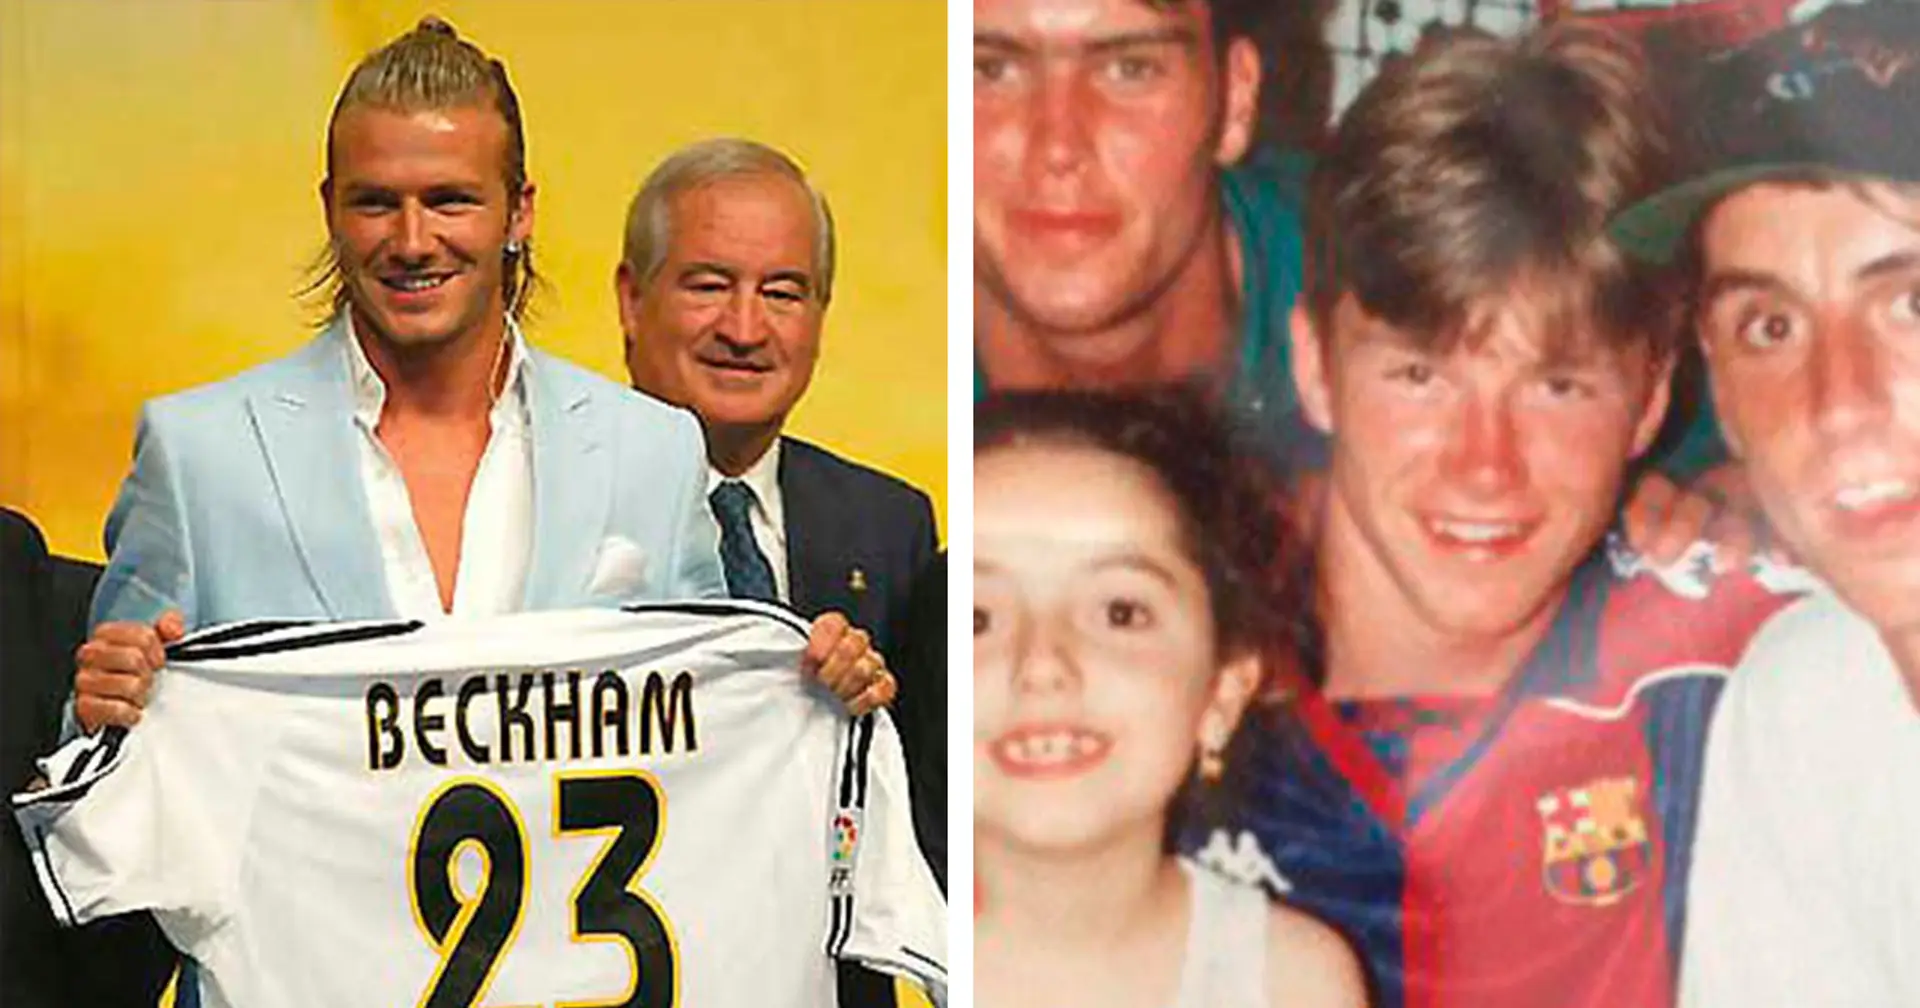 'Imagine if Laporta actually got him': Retro pic of David Beckham wearing Barca jersey goes viral